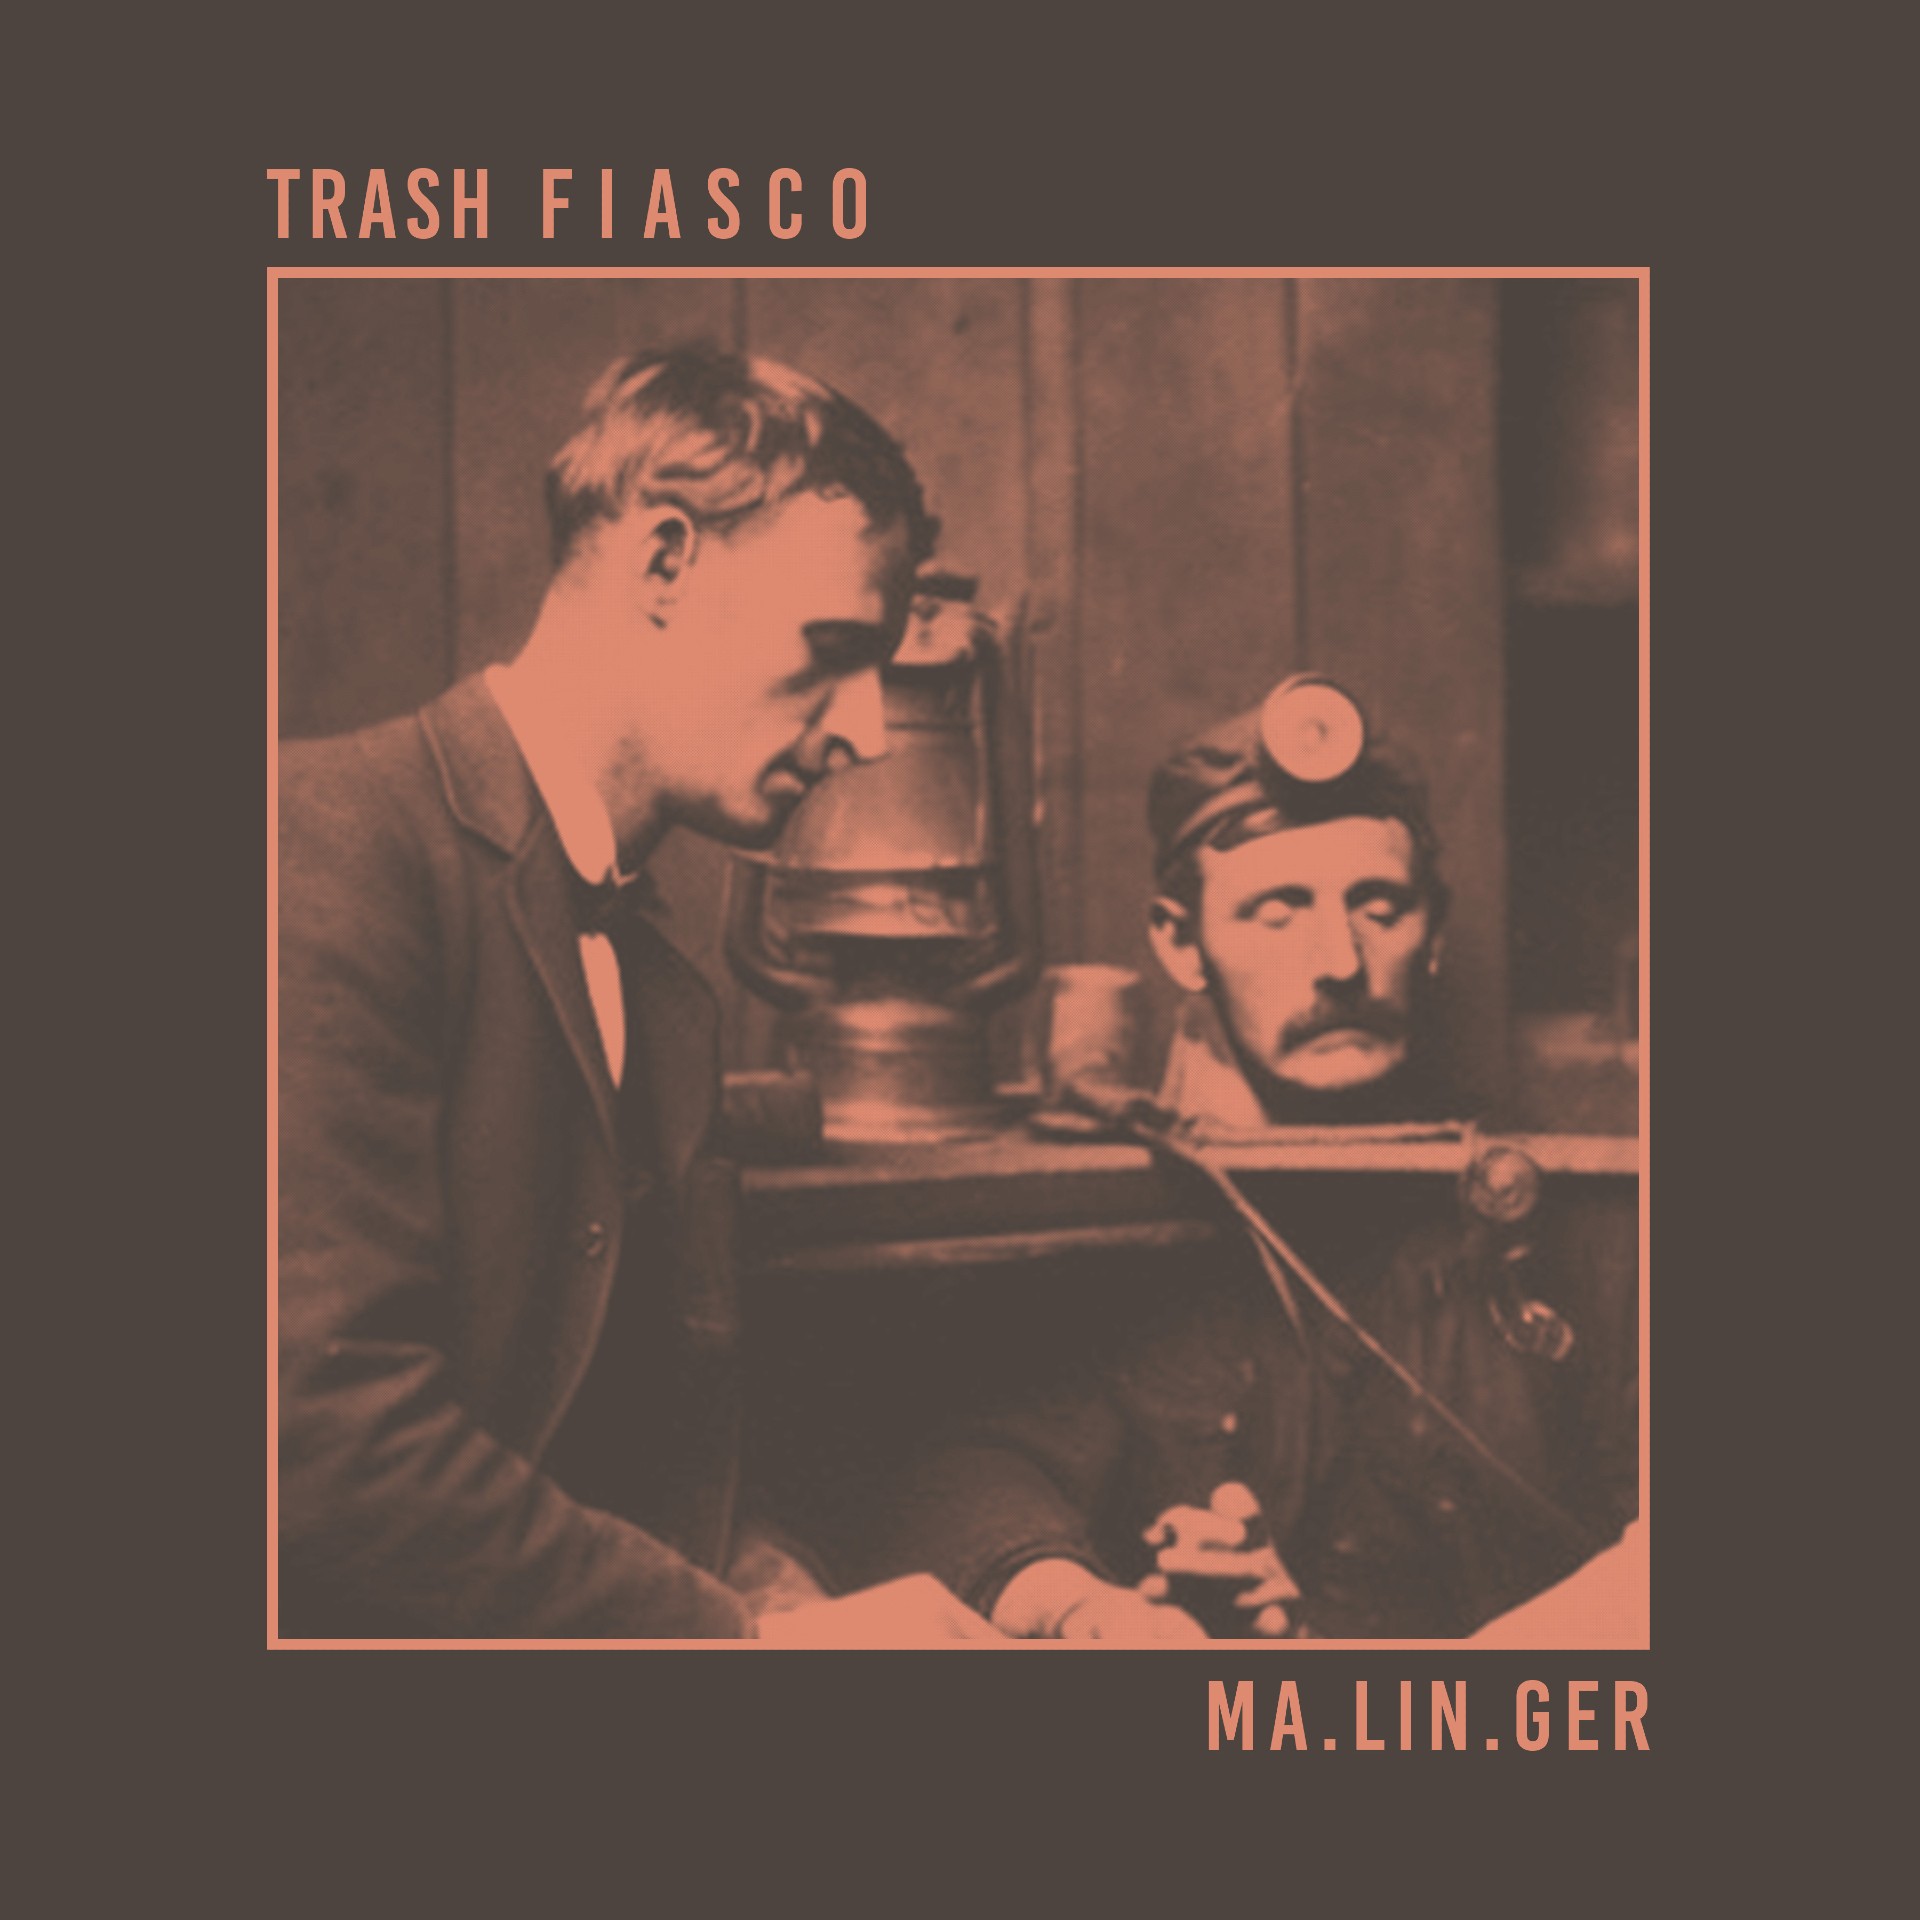 Trash Fiasco “Ma.lin.ger” single artwork